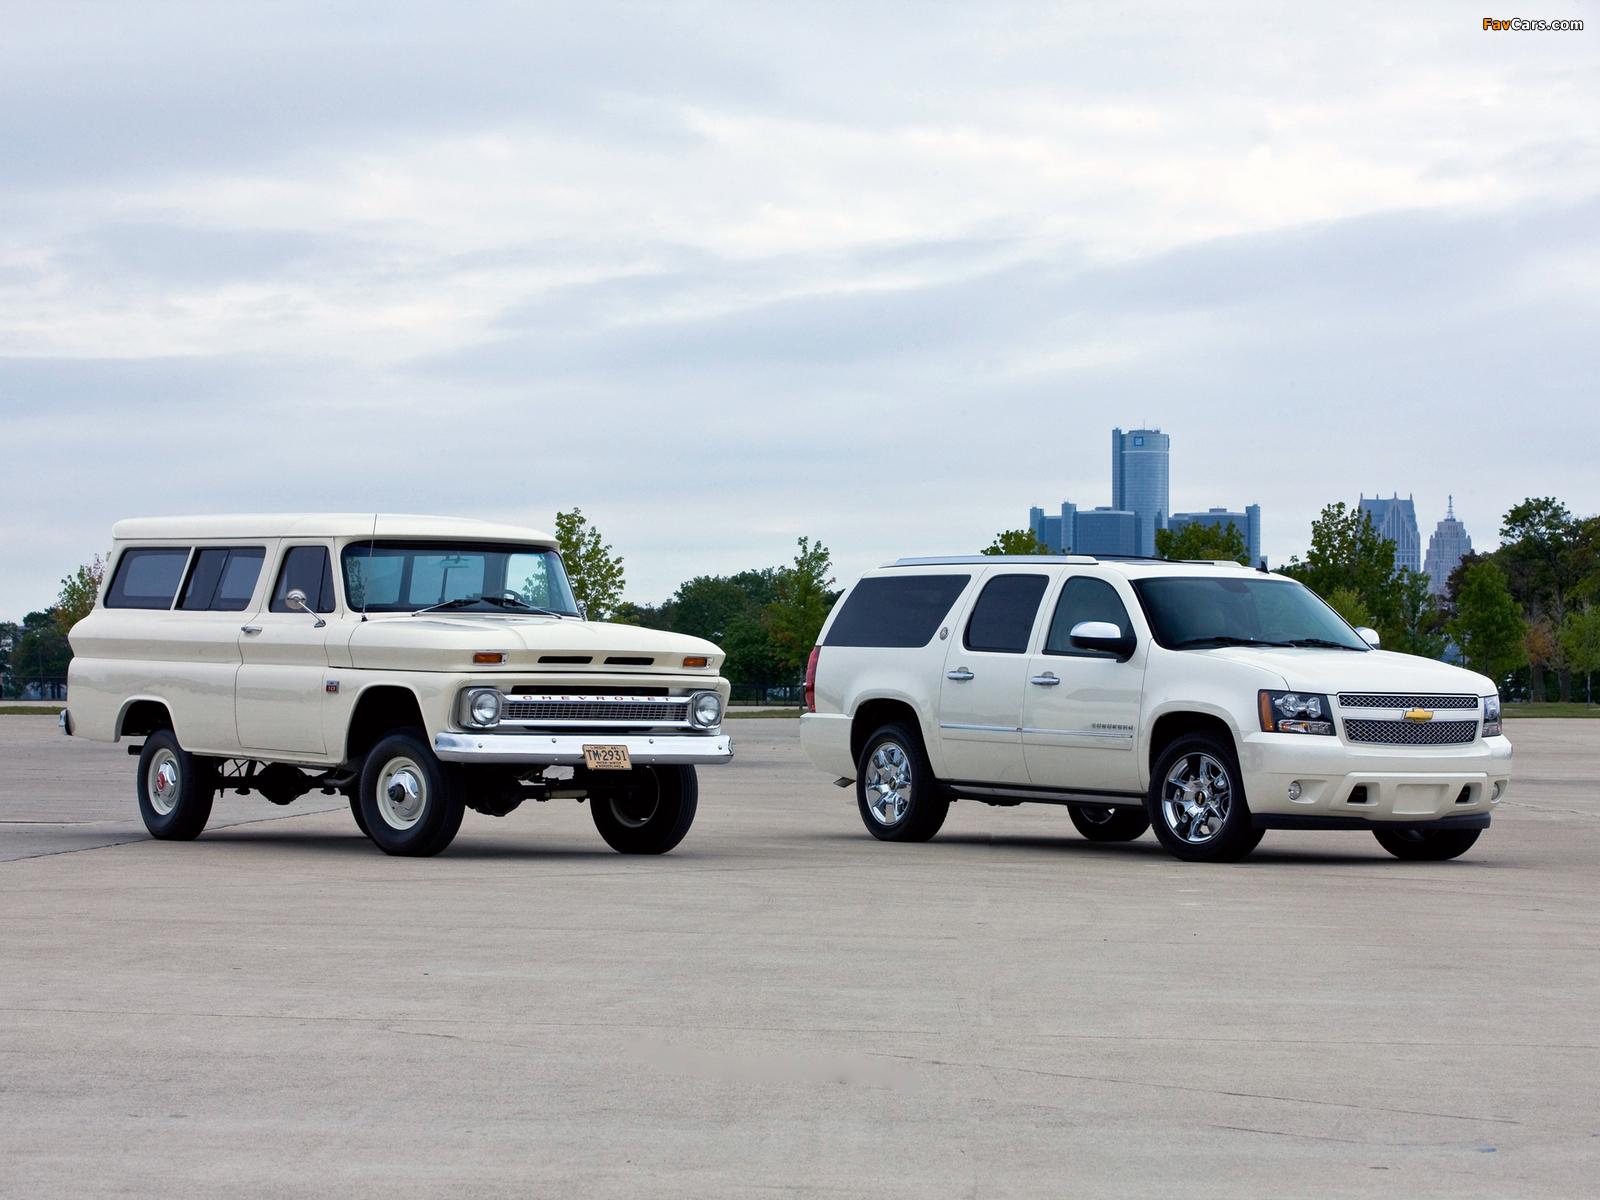 Images of Chevrolet Suburban (1600 x 1200)